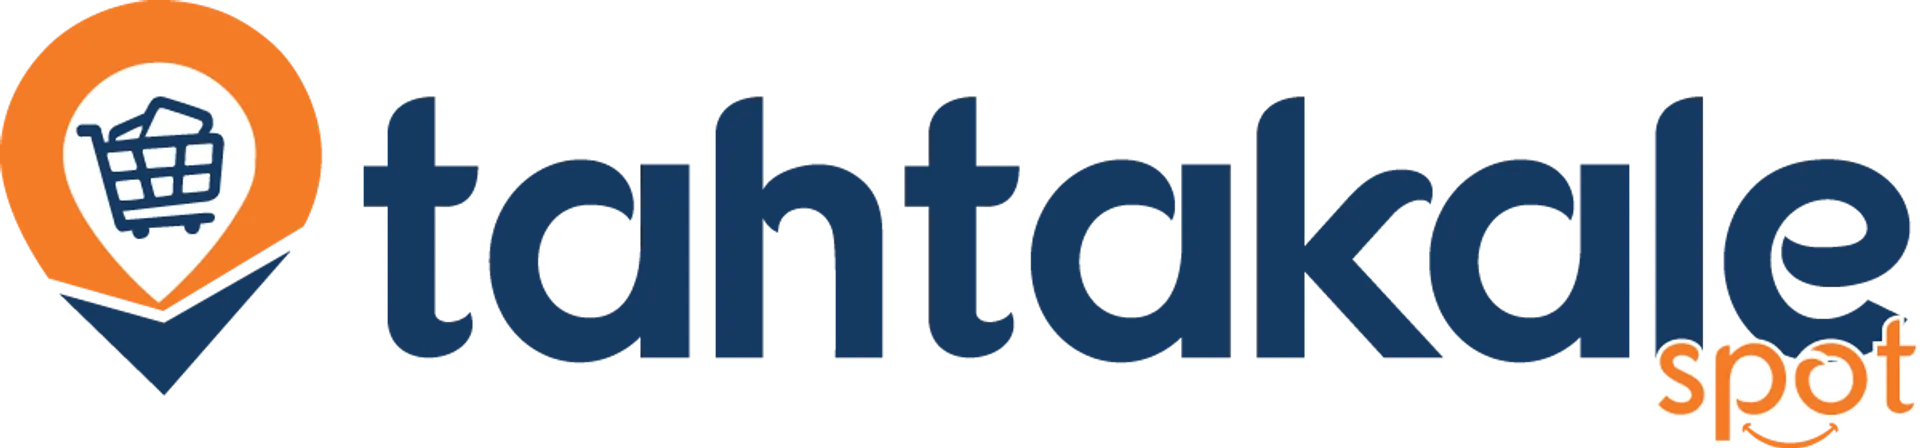 TAHTAKALE SPOT logo